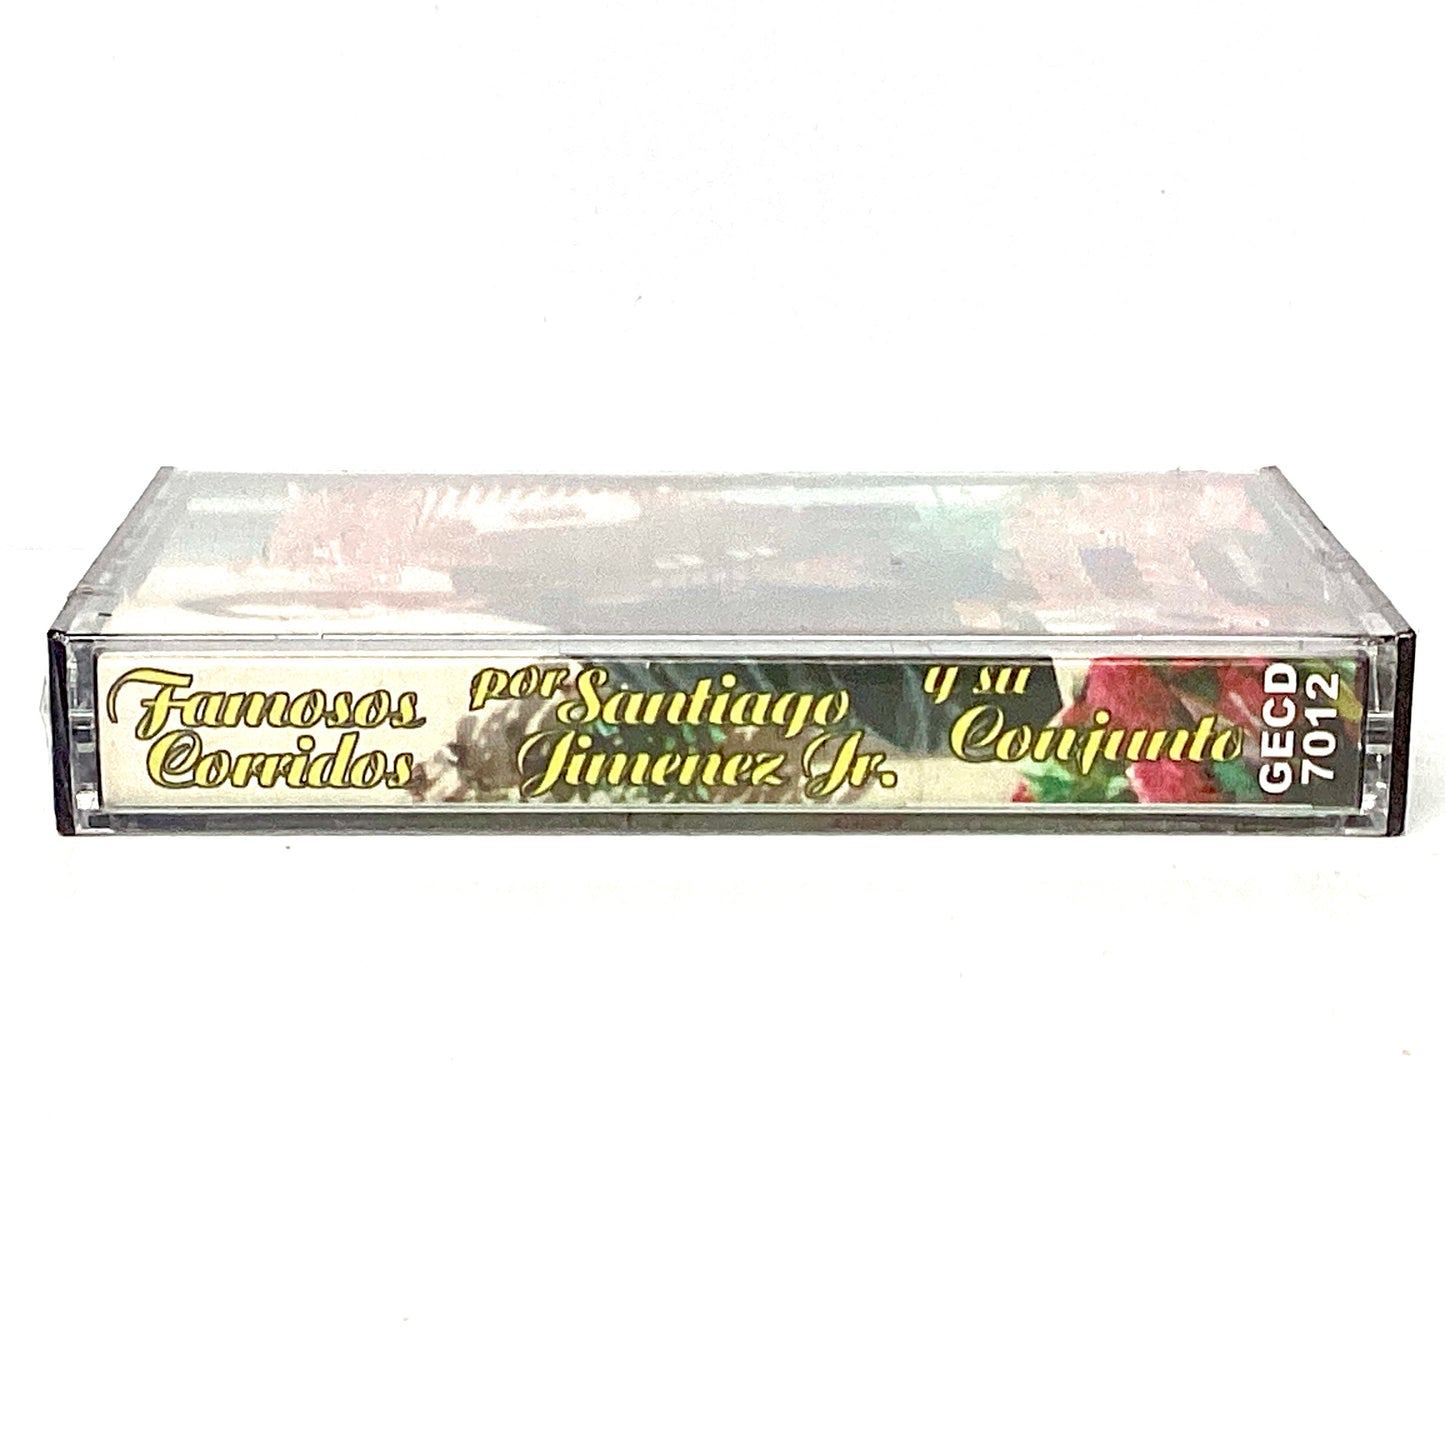 Santiago Jimenez Jr. Y Su Conjunto - Famosos Corridos (Cassette)